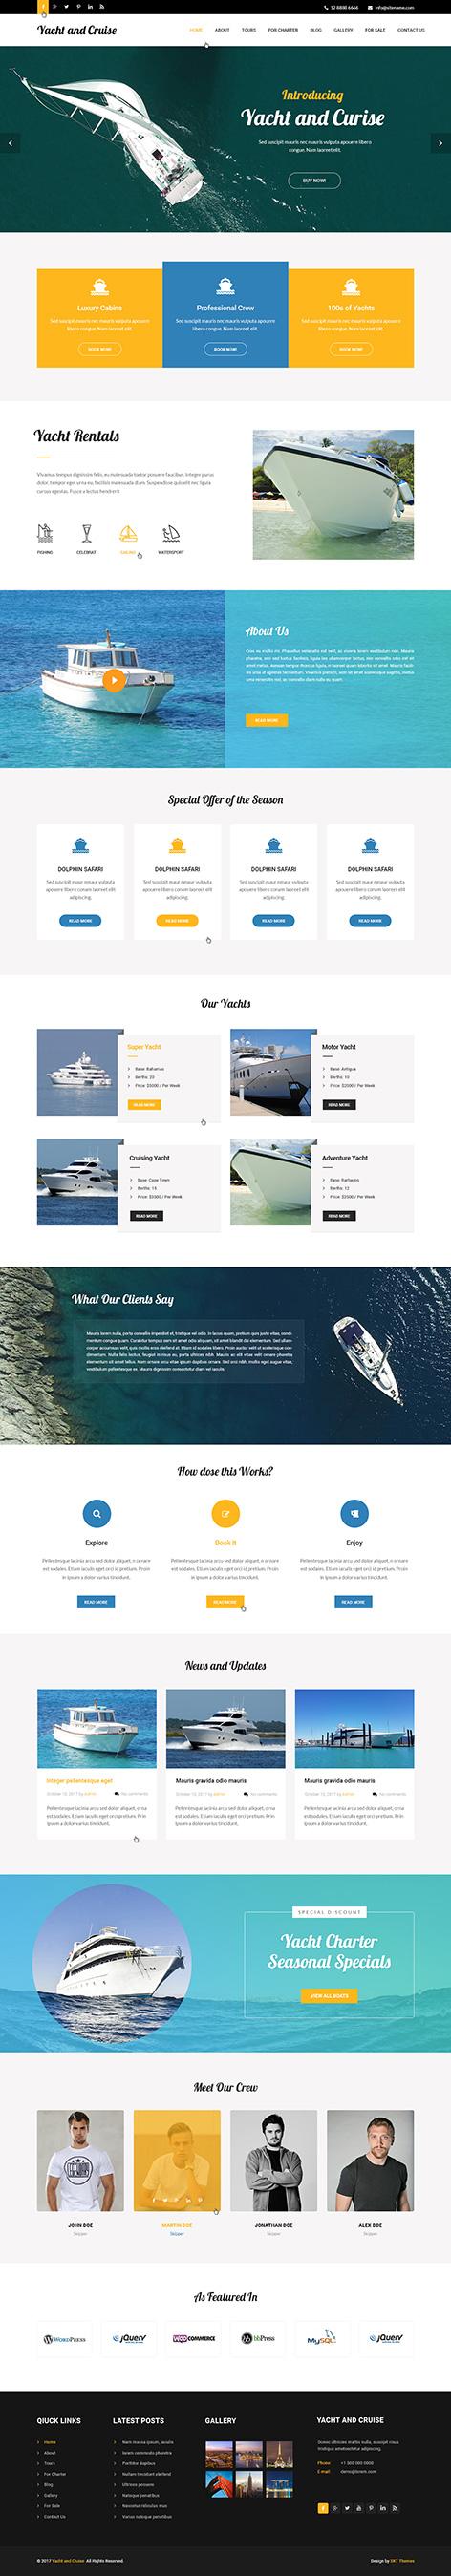 yacht cruise wordpress theme1 - Yacht and Cruise